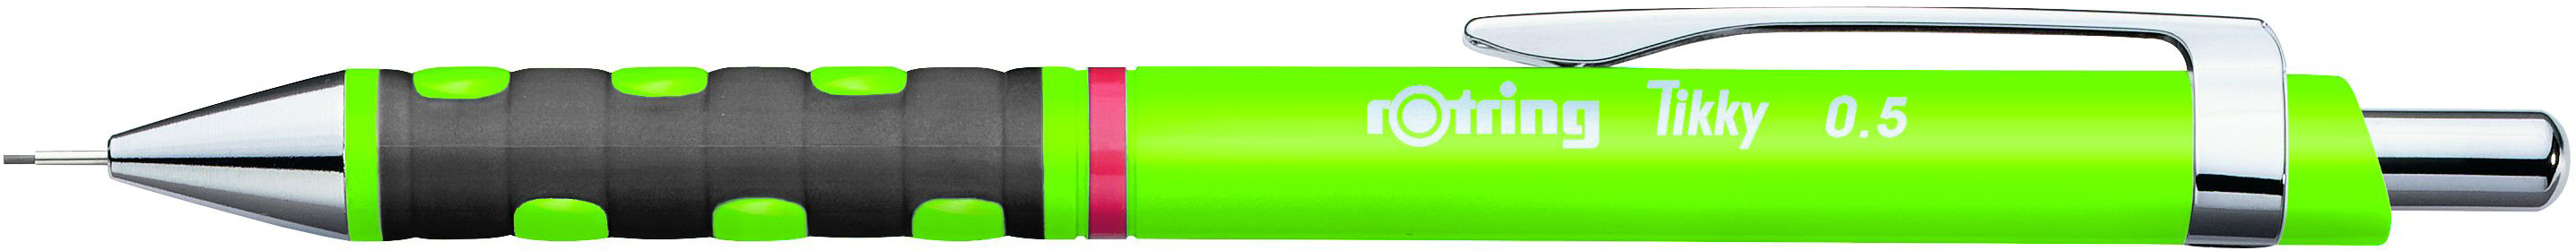 ROTRING Portemines TIKKY 0.5mm 2007217 neon vert